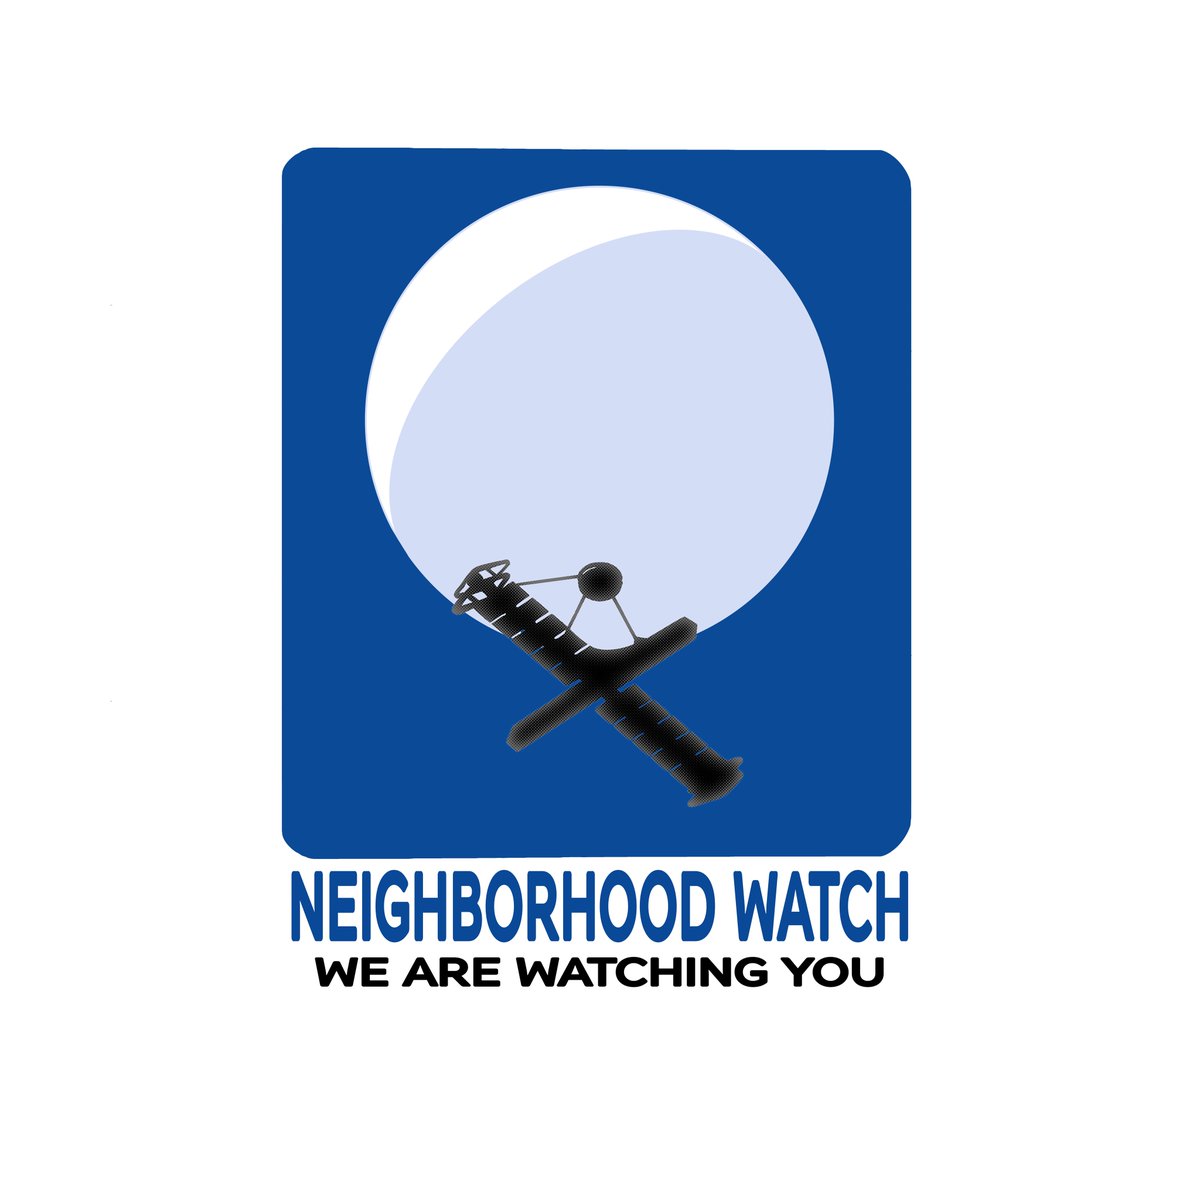 Who watches the watchmen #ChineseSpyBalloon #neighborhoodwatch